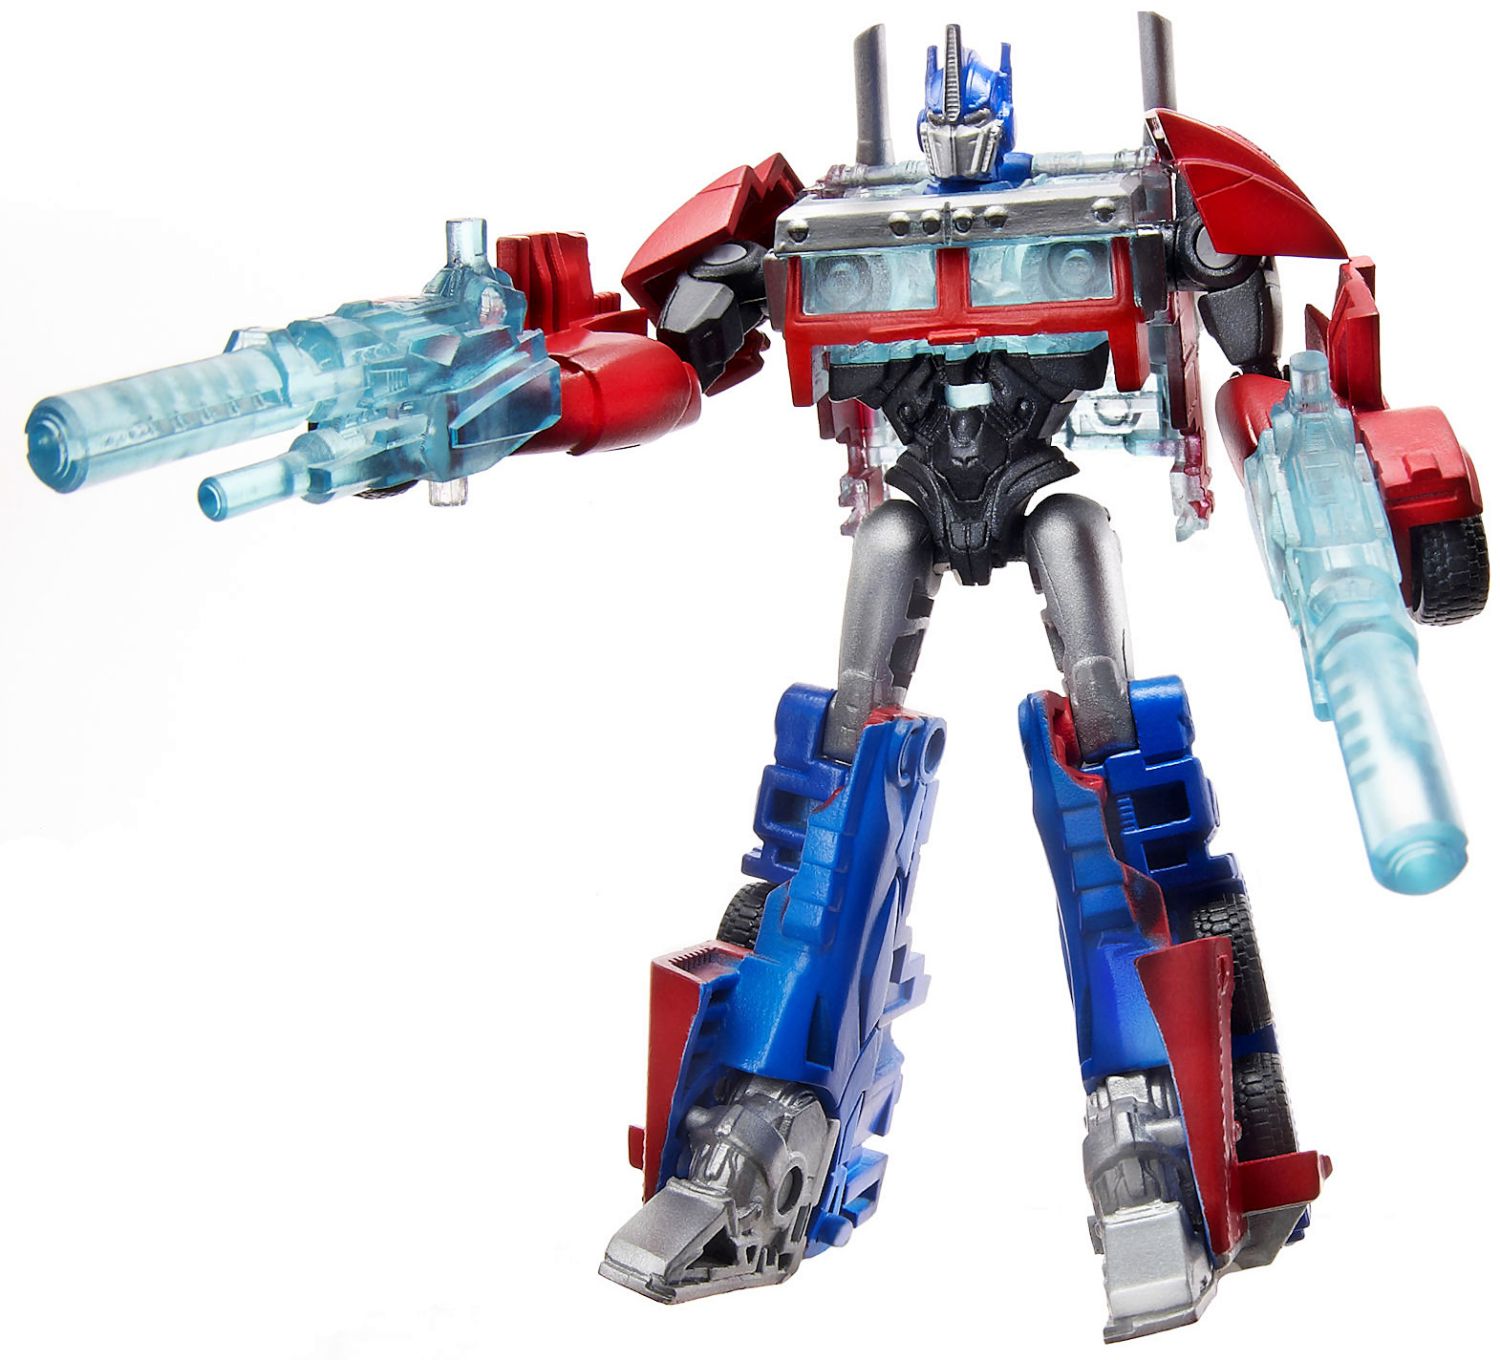 Трансформеры оптимус купить. Оптимус Прайм игрушка трансформер. Transformers Prime Optimus Prime Toy. Трансформеры 2 игрушки Оптимус Прайм. Transformers Optimus Prime Toy Hasbro.